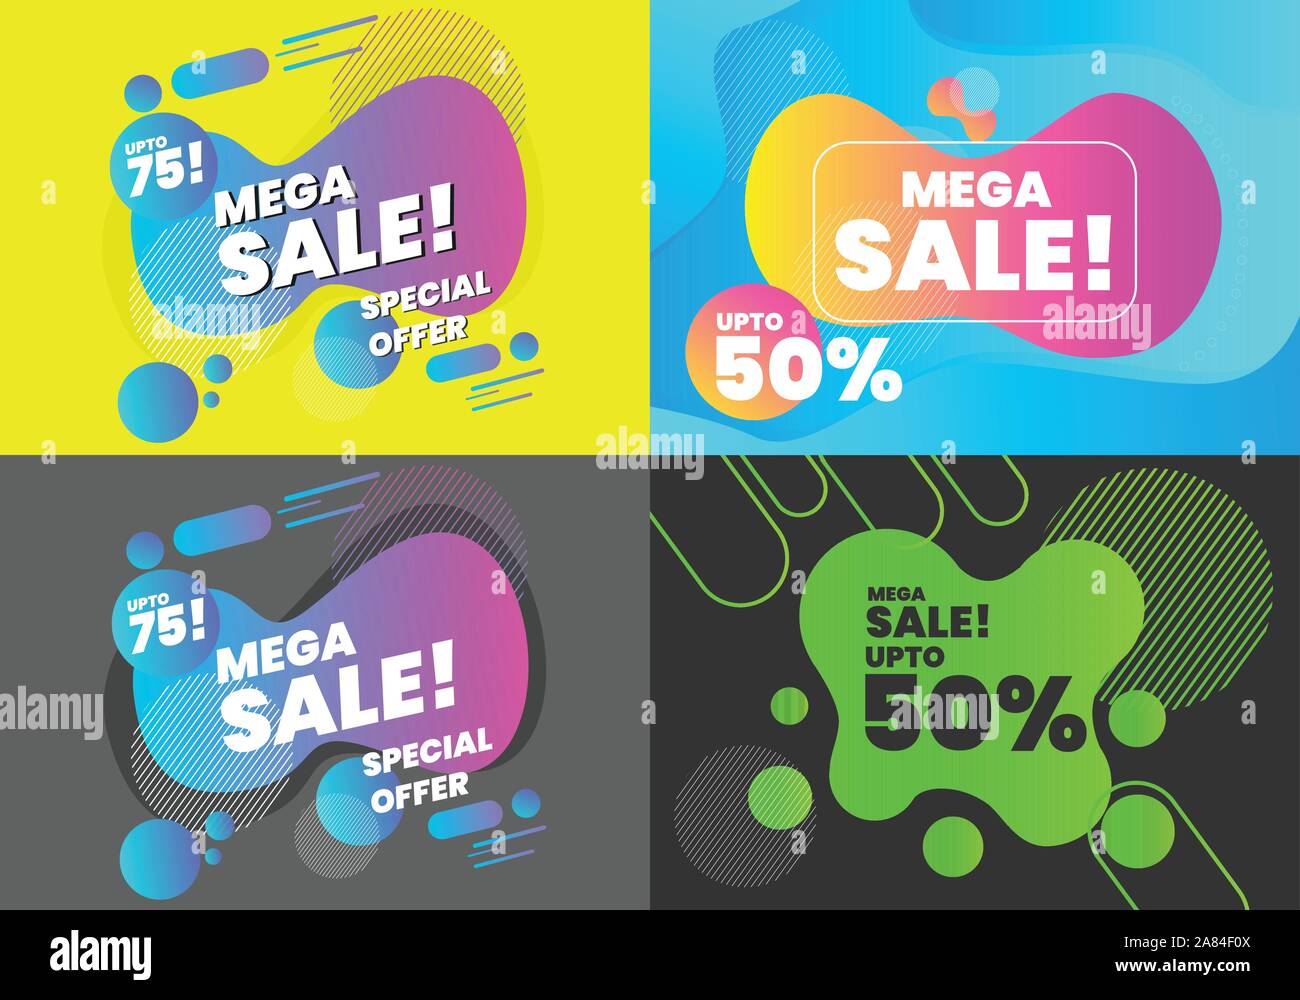 Special offer - mega offer promotional backgrounds Stock Vector